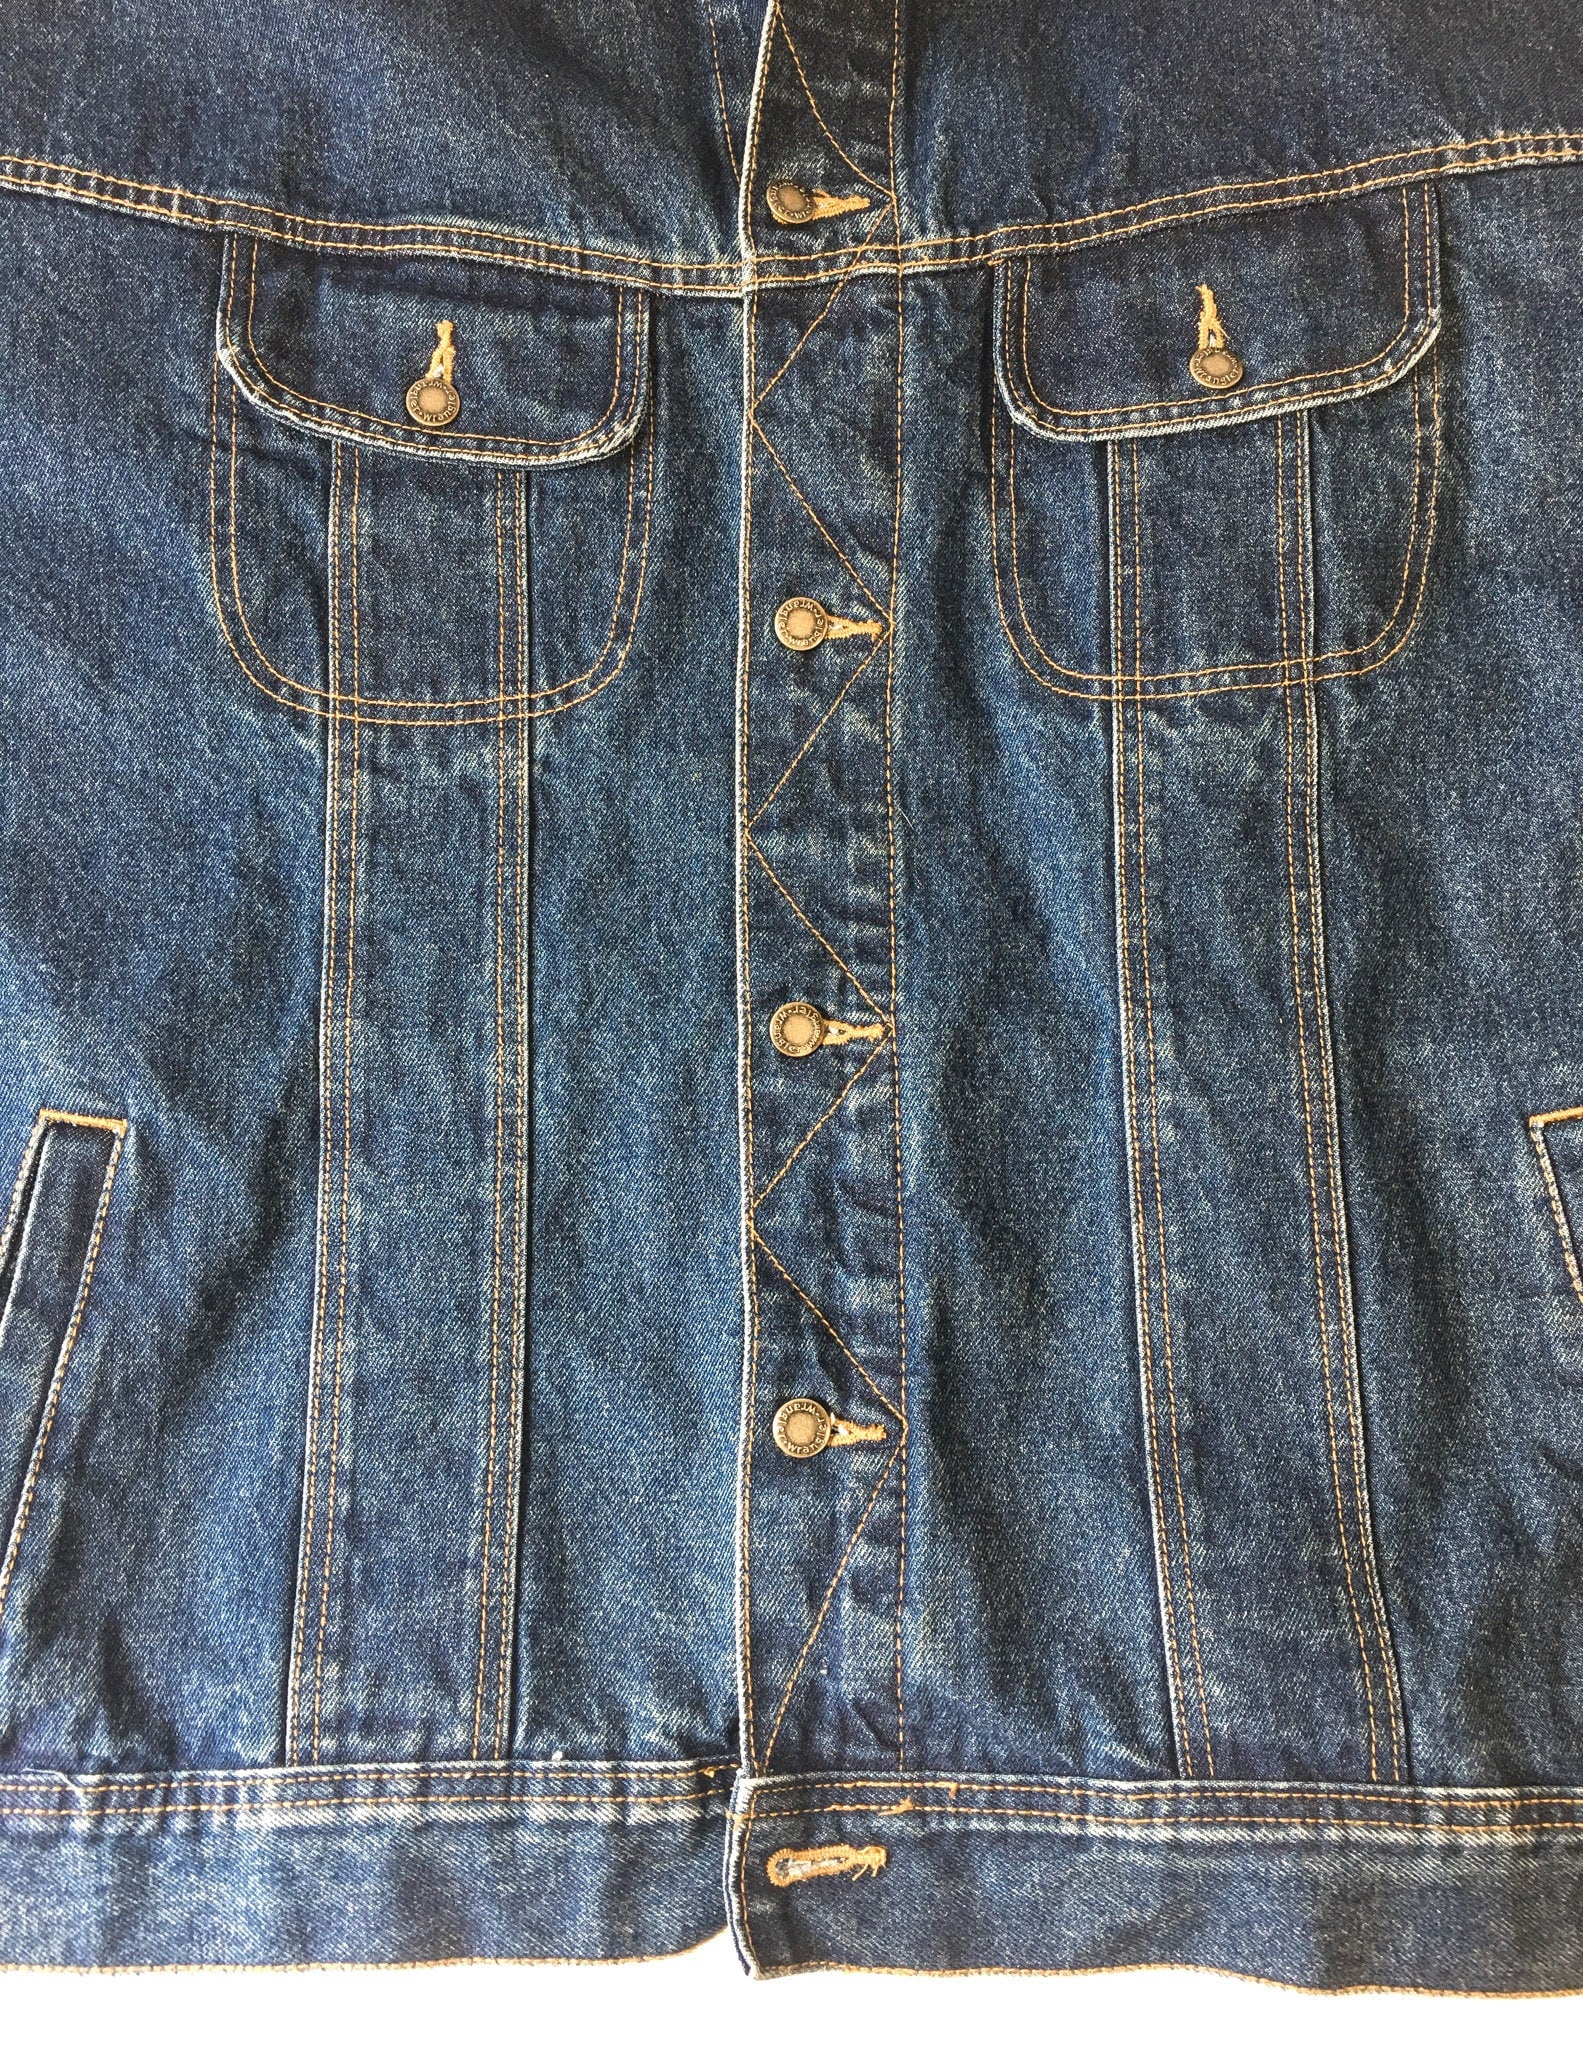 Vintage 90s Wrangler Dark Wash Denim Jacket, Sz. 4X, Vintage Jean Jacket